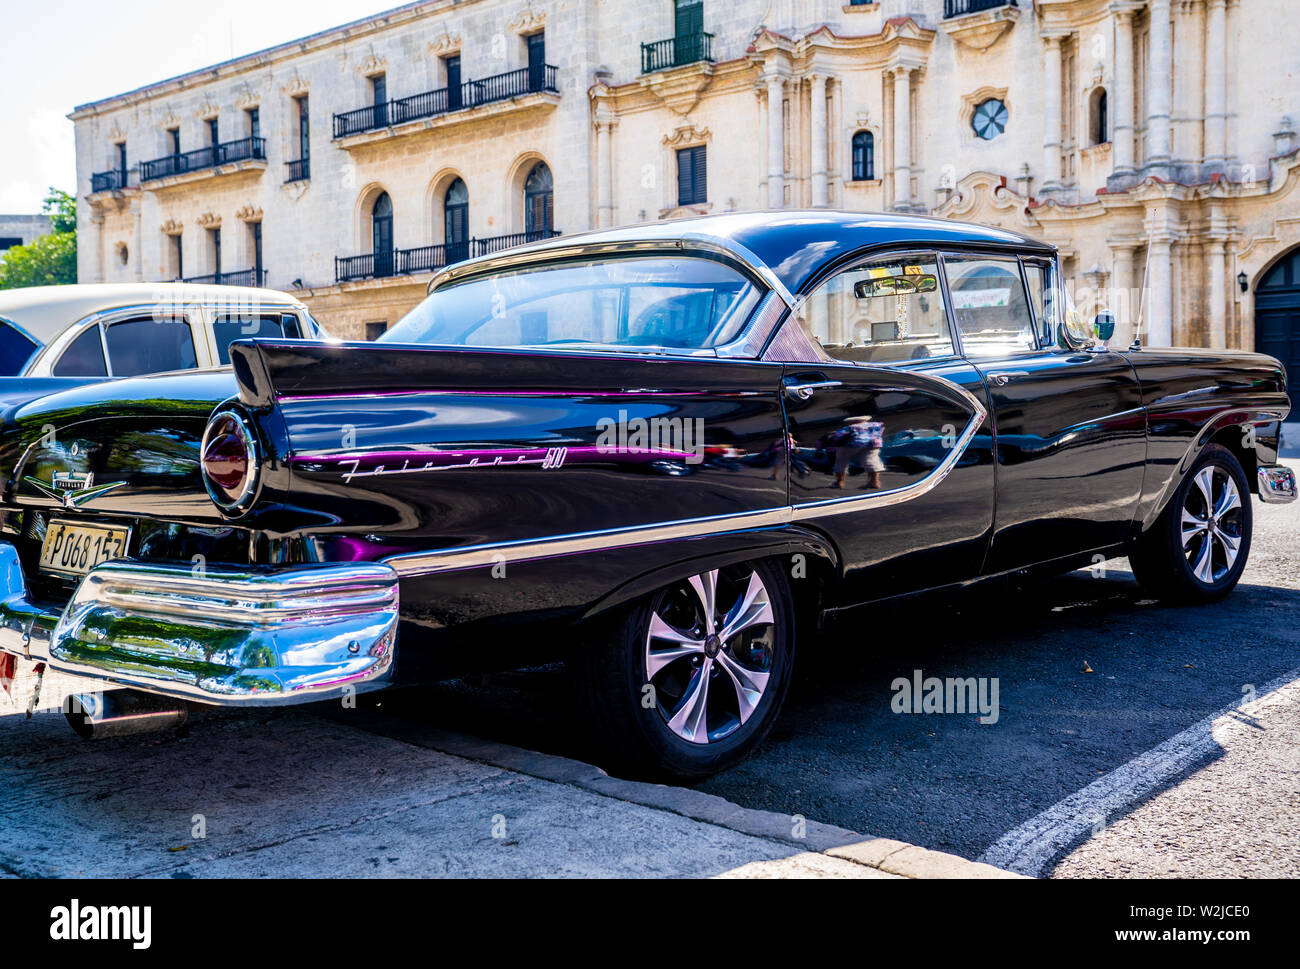 Old Havana, Cuba - January 2, 2019: A beautiful American car parked in the streets of Havana, Cuba. Stock Photo